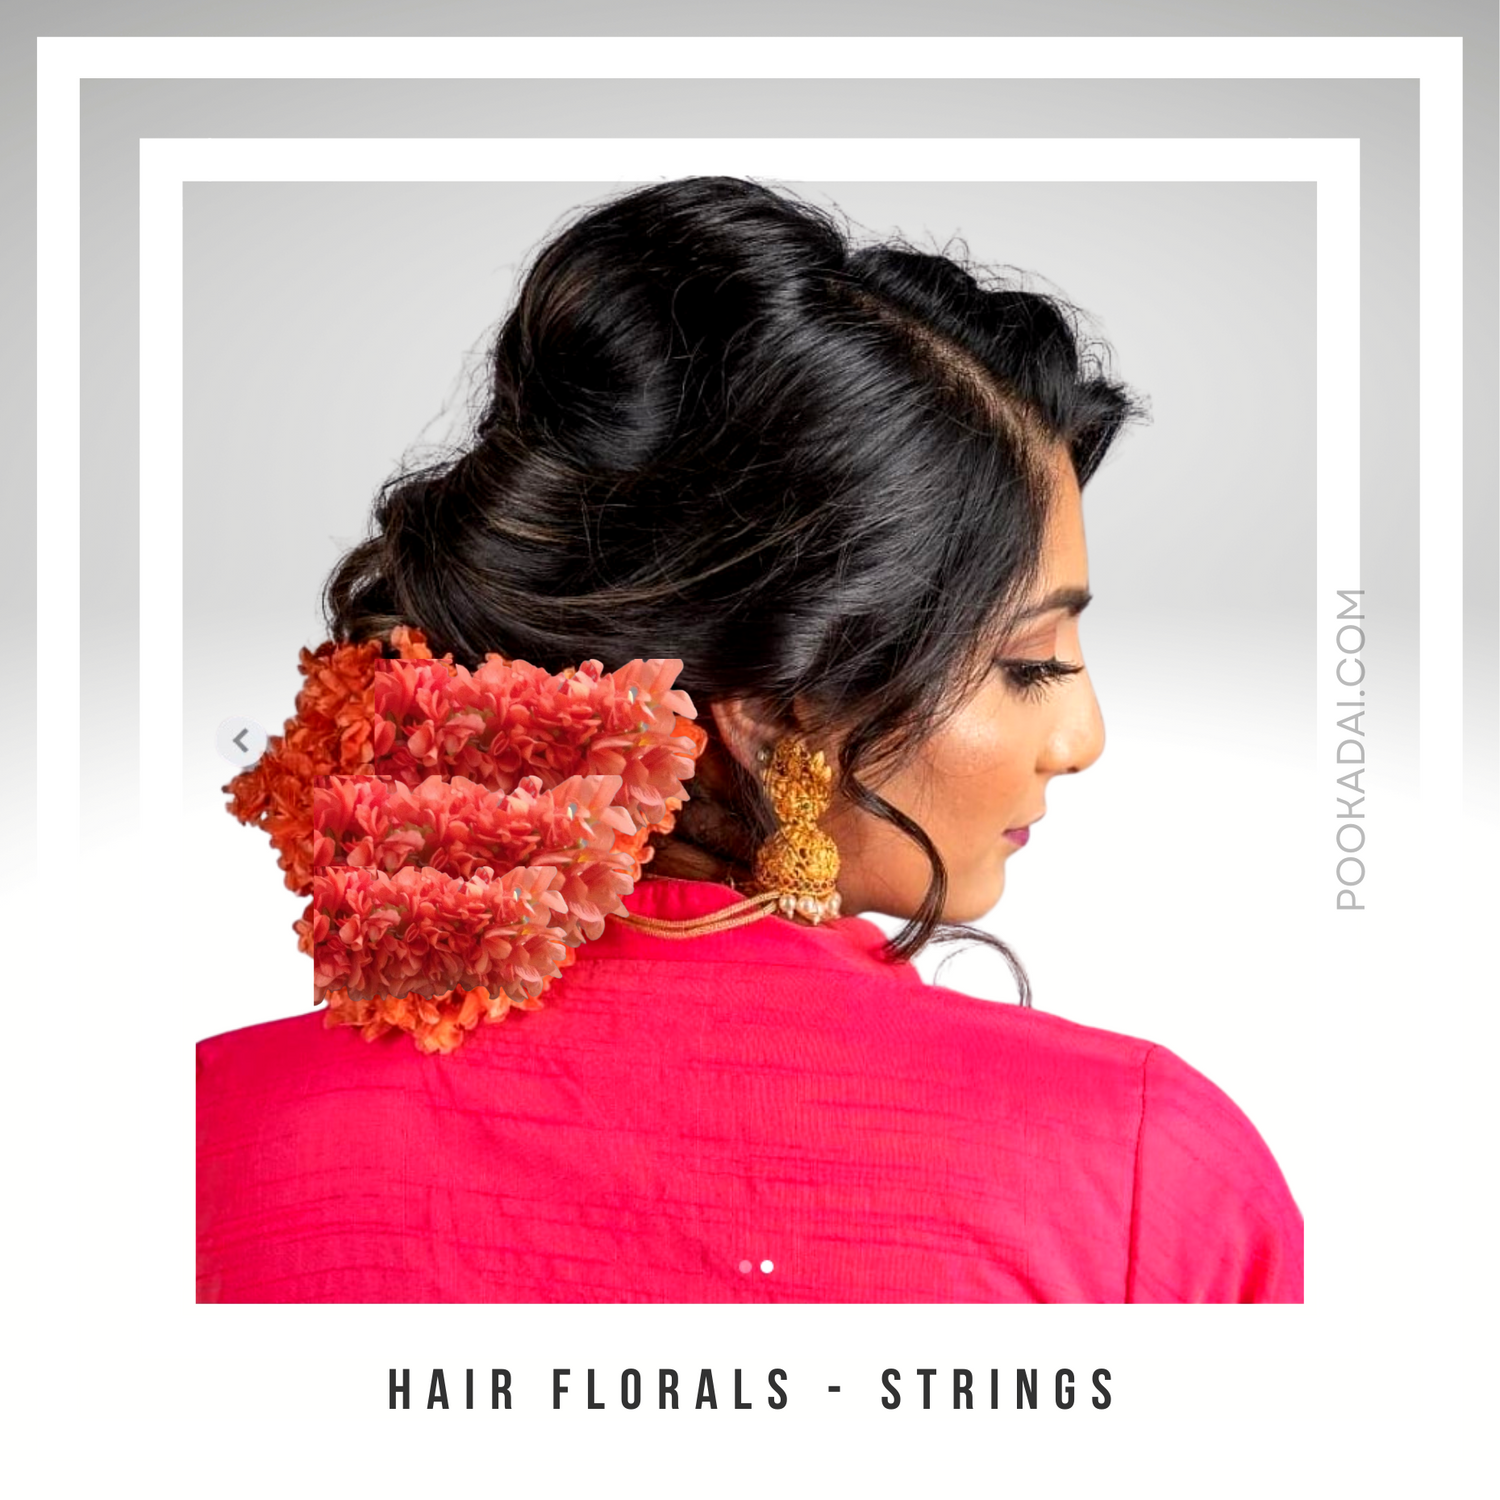 Hair Florals - Strings